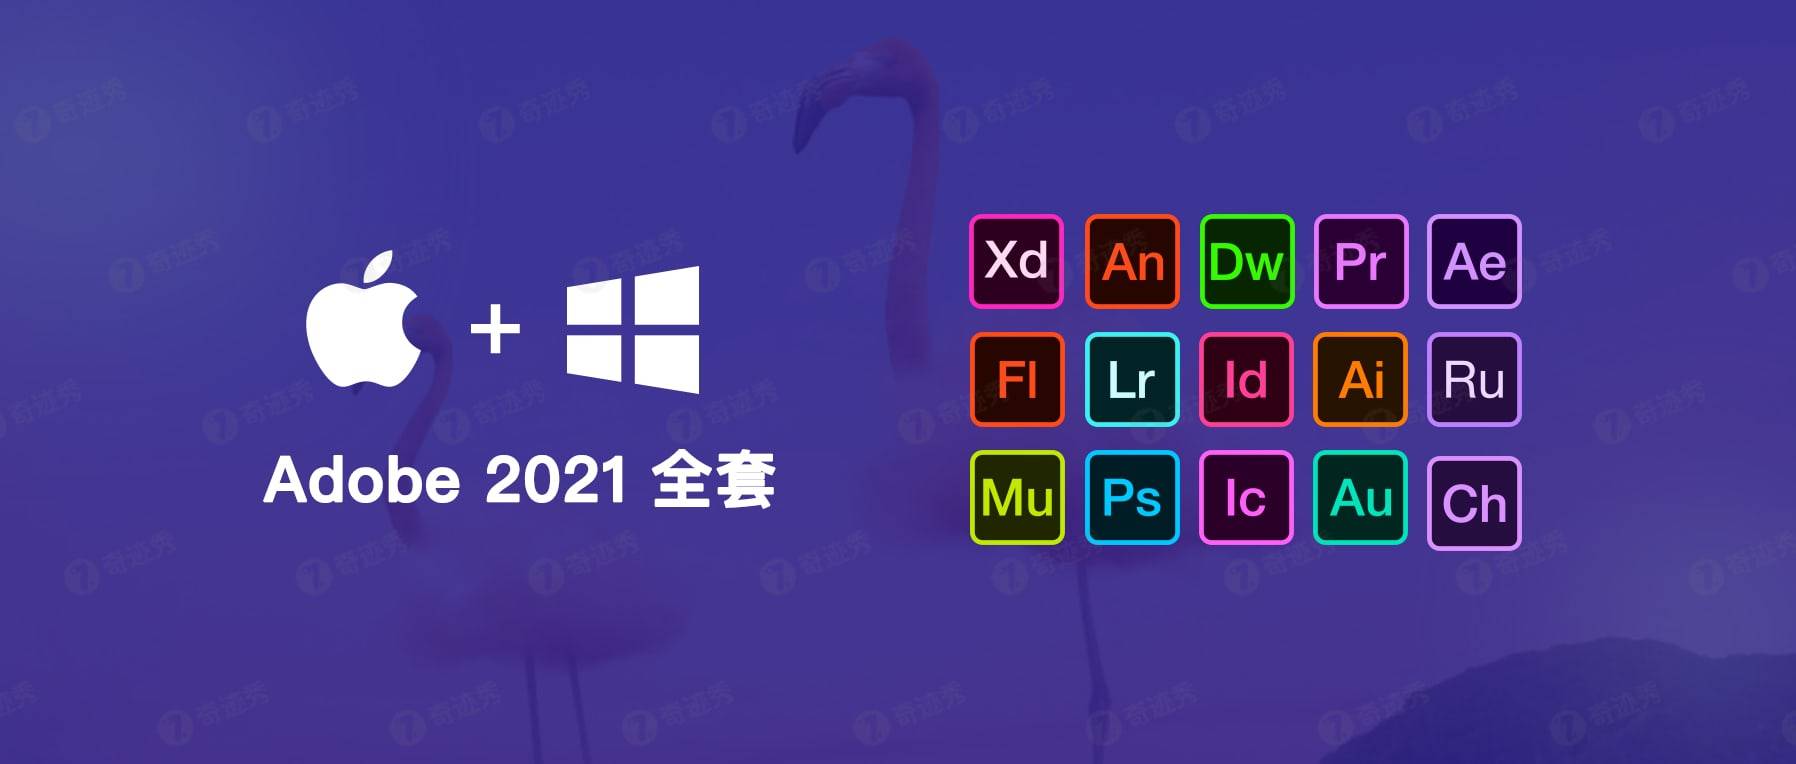 Adobe 2021 M1 系列全套下载